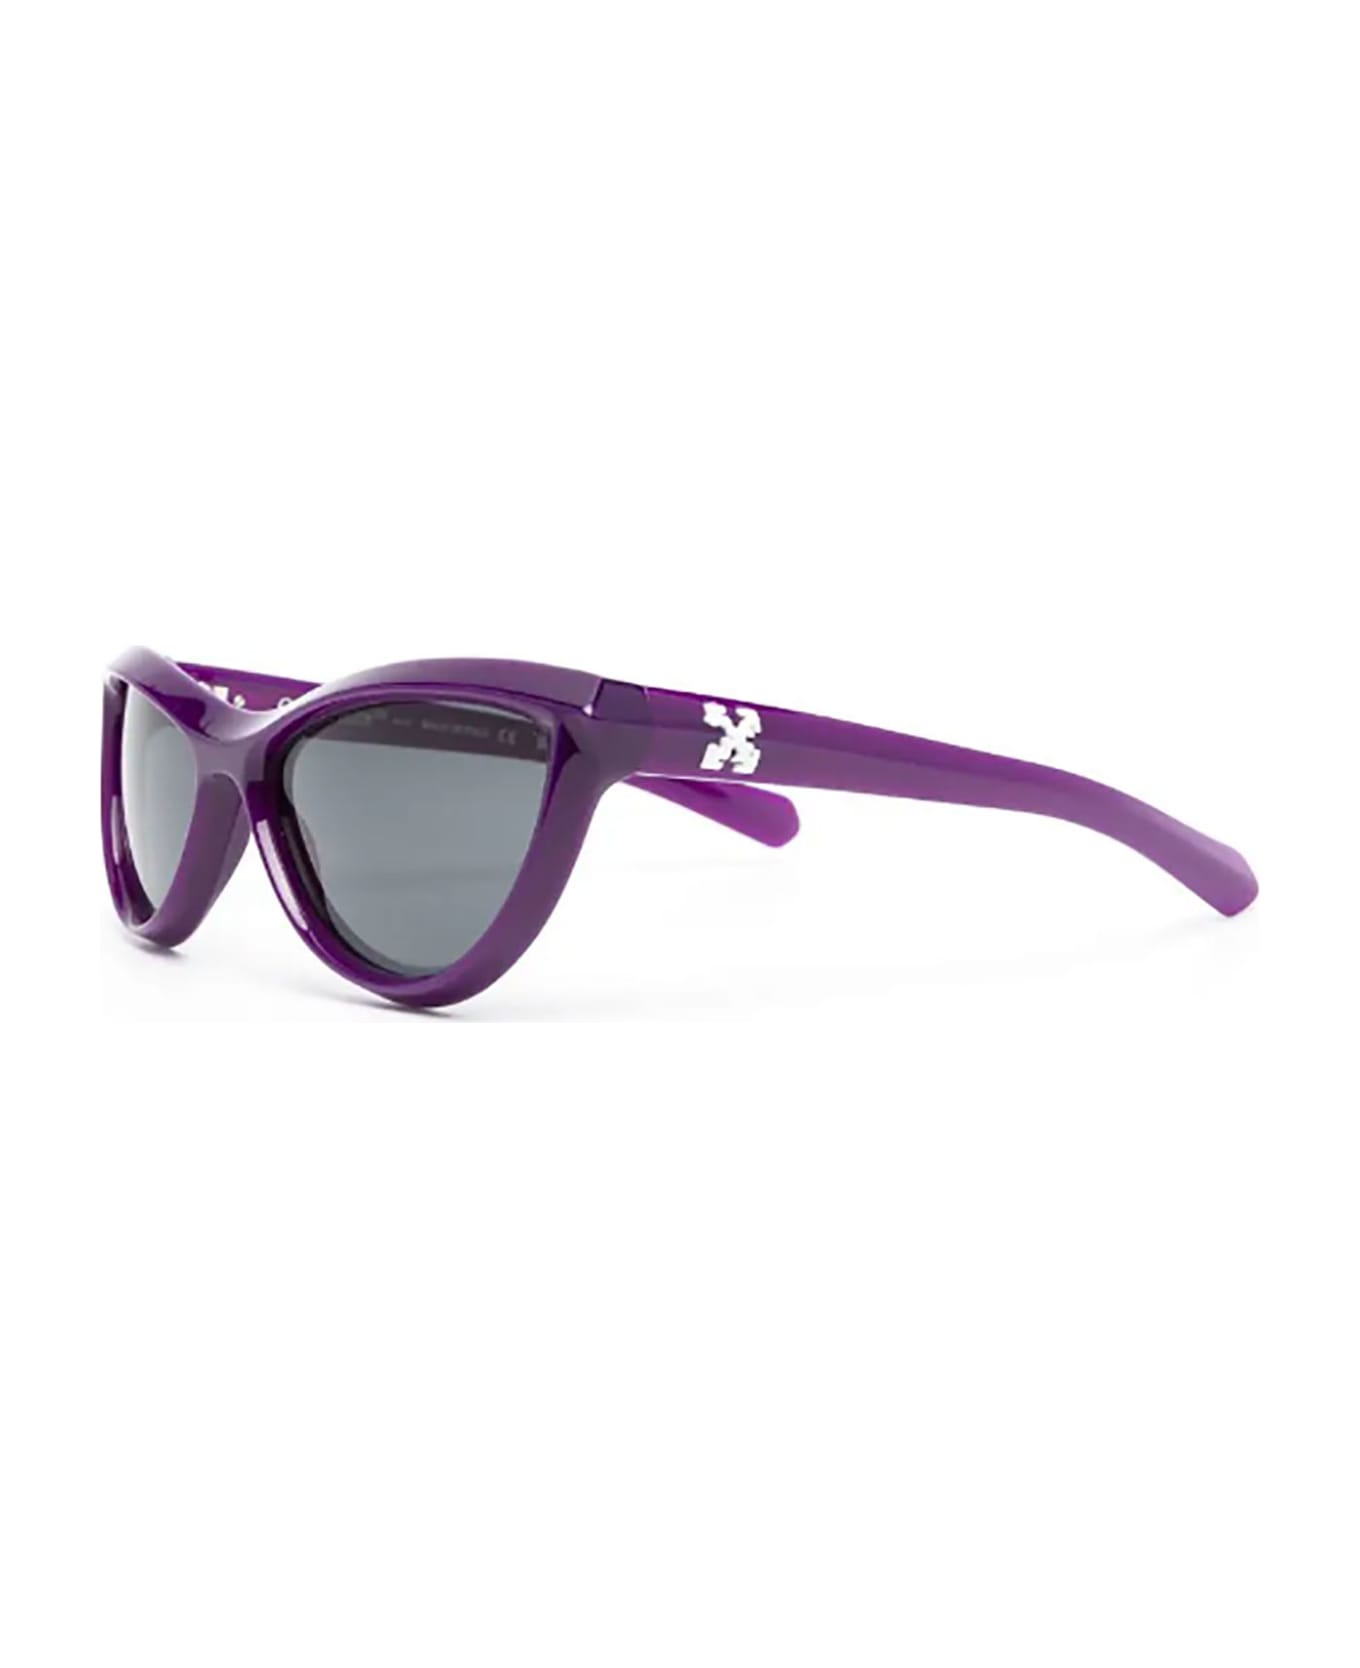 Off-White ATLANTA SUNGLASSES Sunglasses - Purple